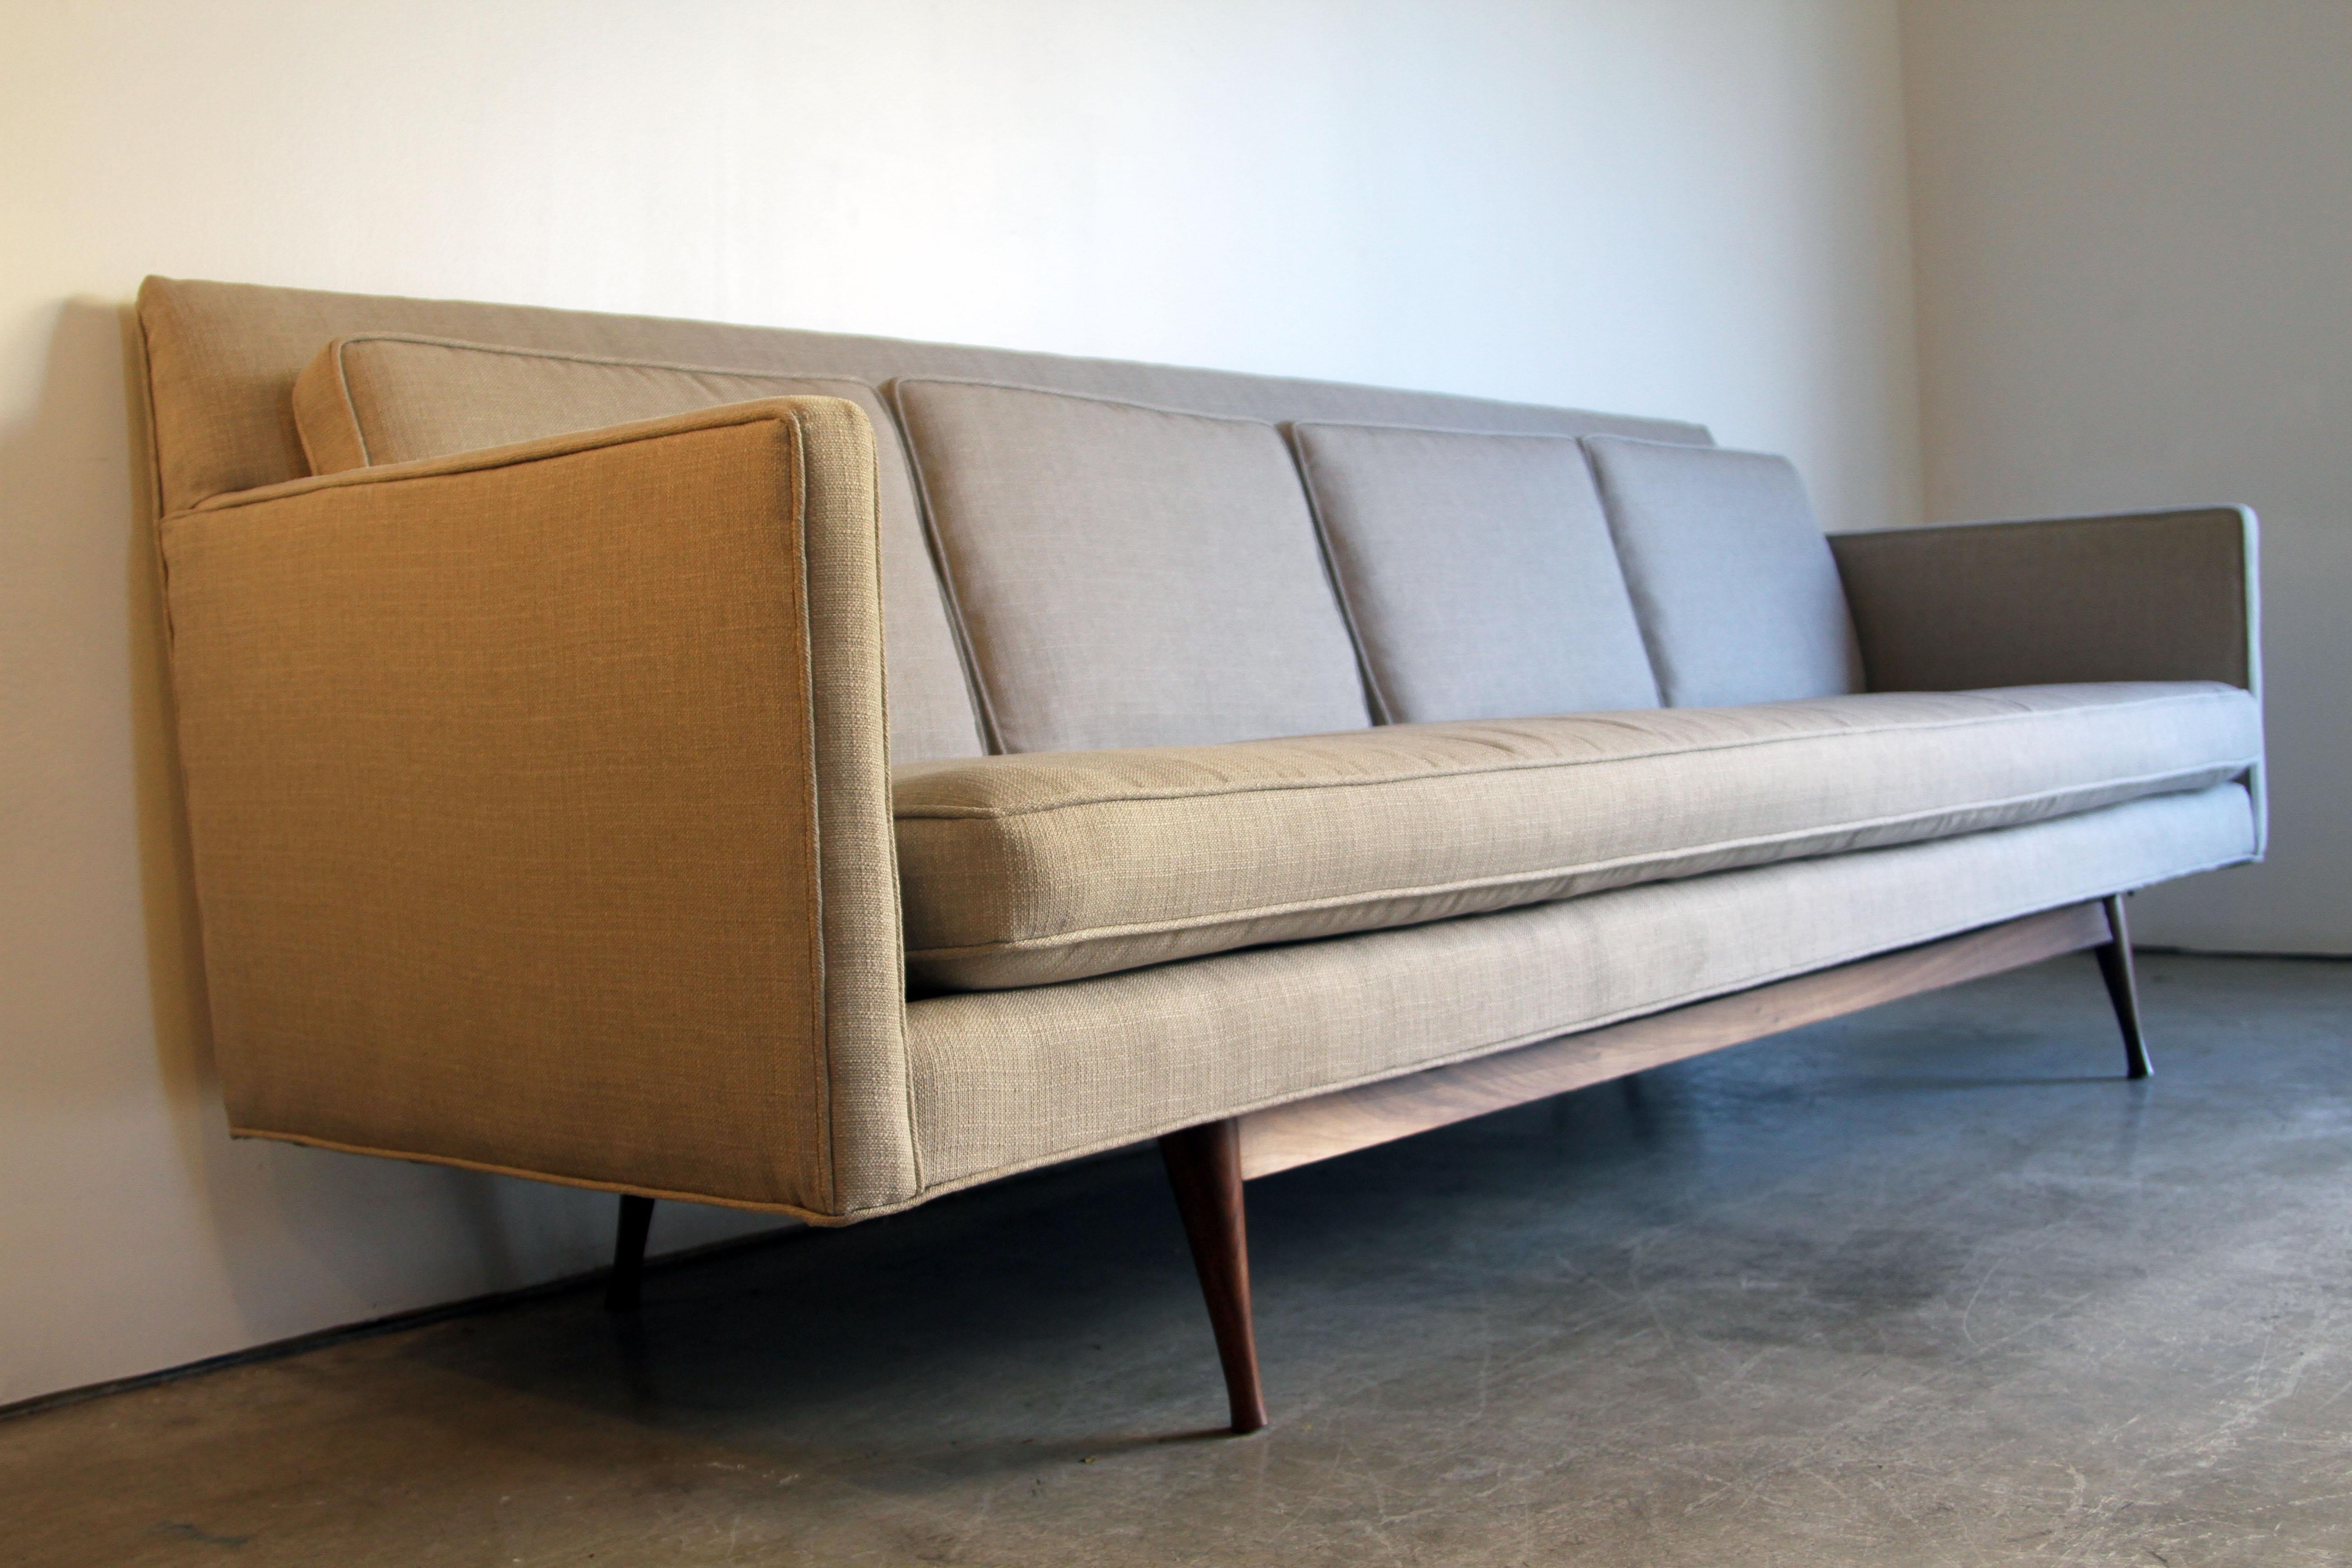 Amsterdam School Custom Made Paul McCobb Sofa Recently Reupholstered